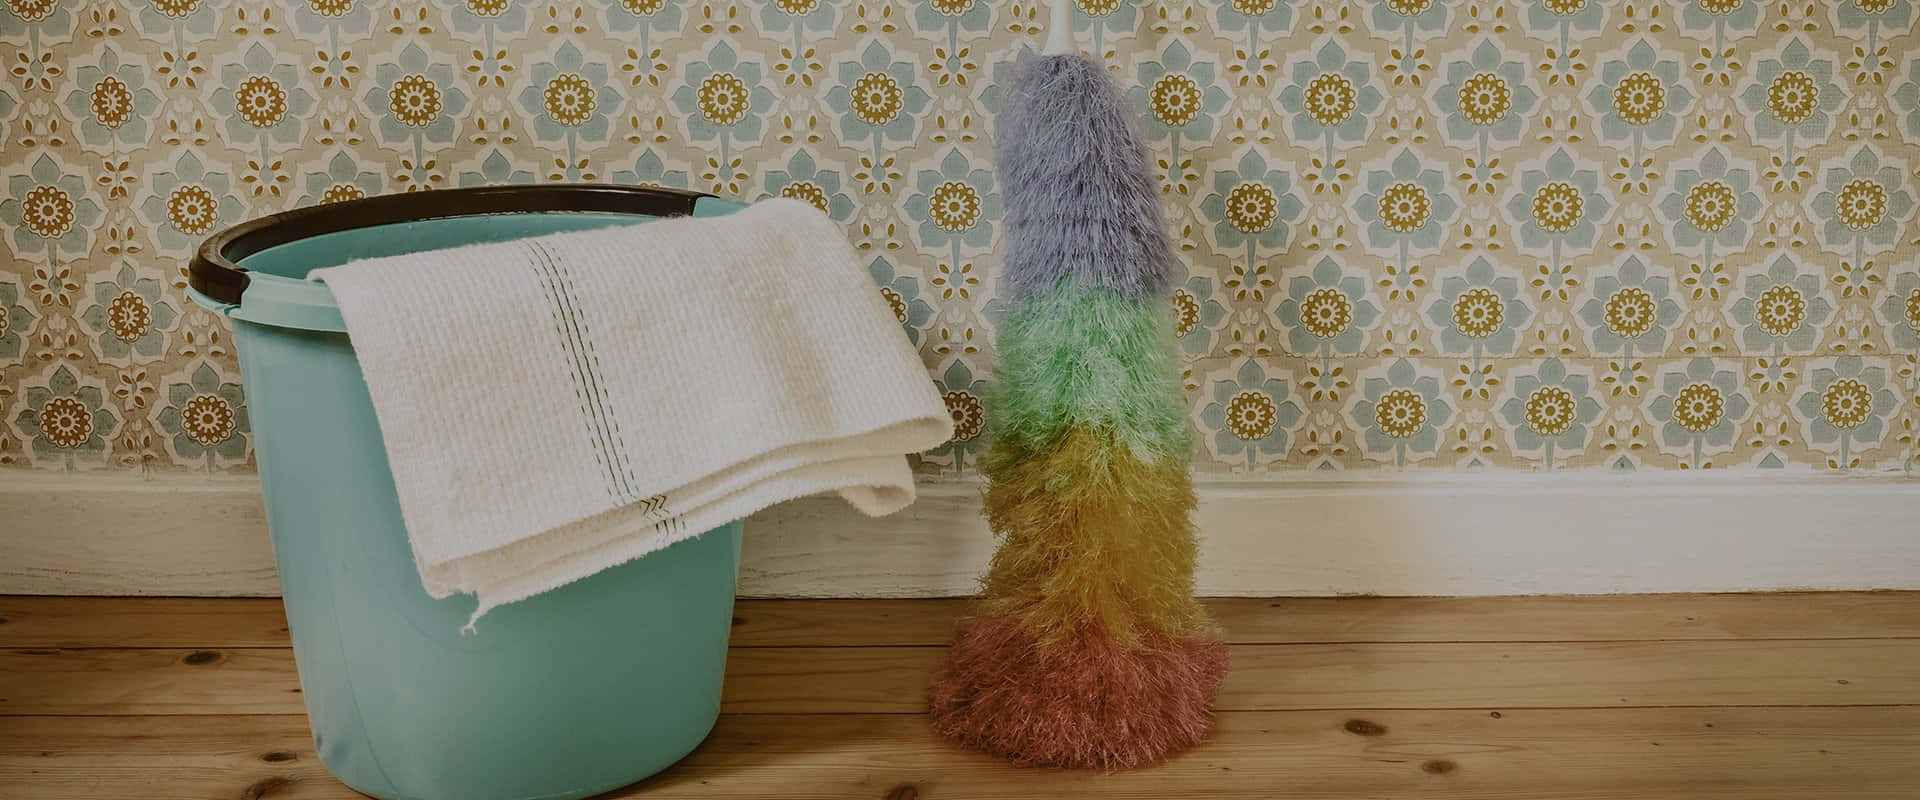 Cleaning Bucket Towel Duster Wallpaper